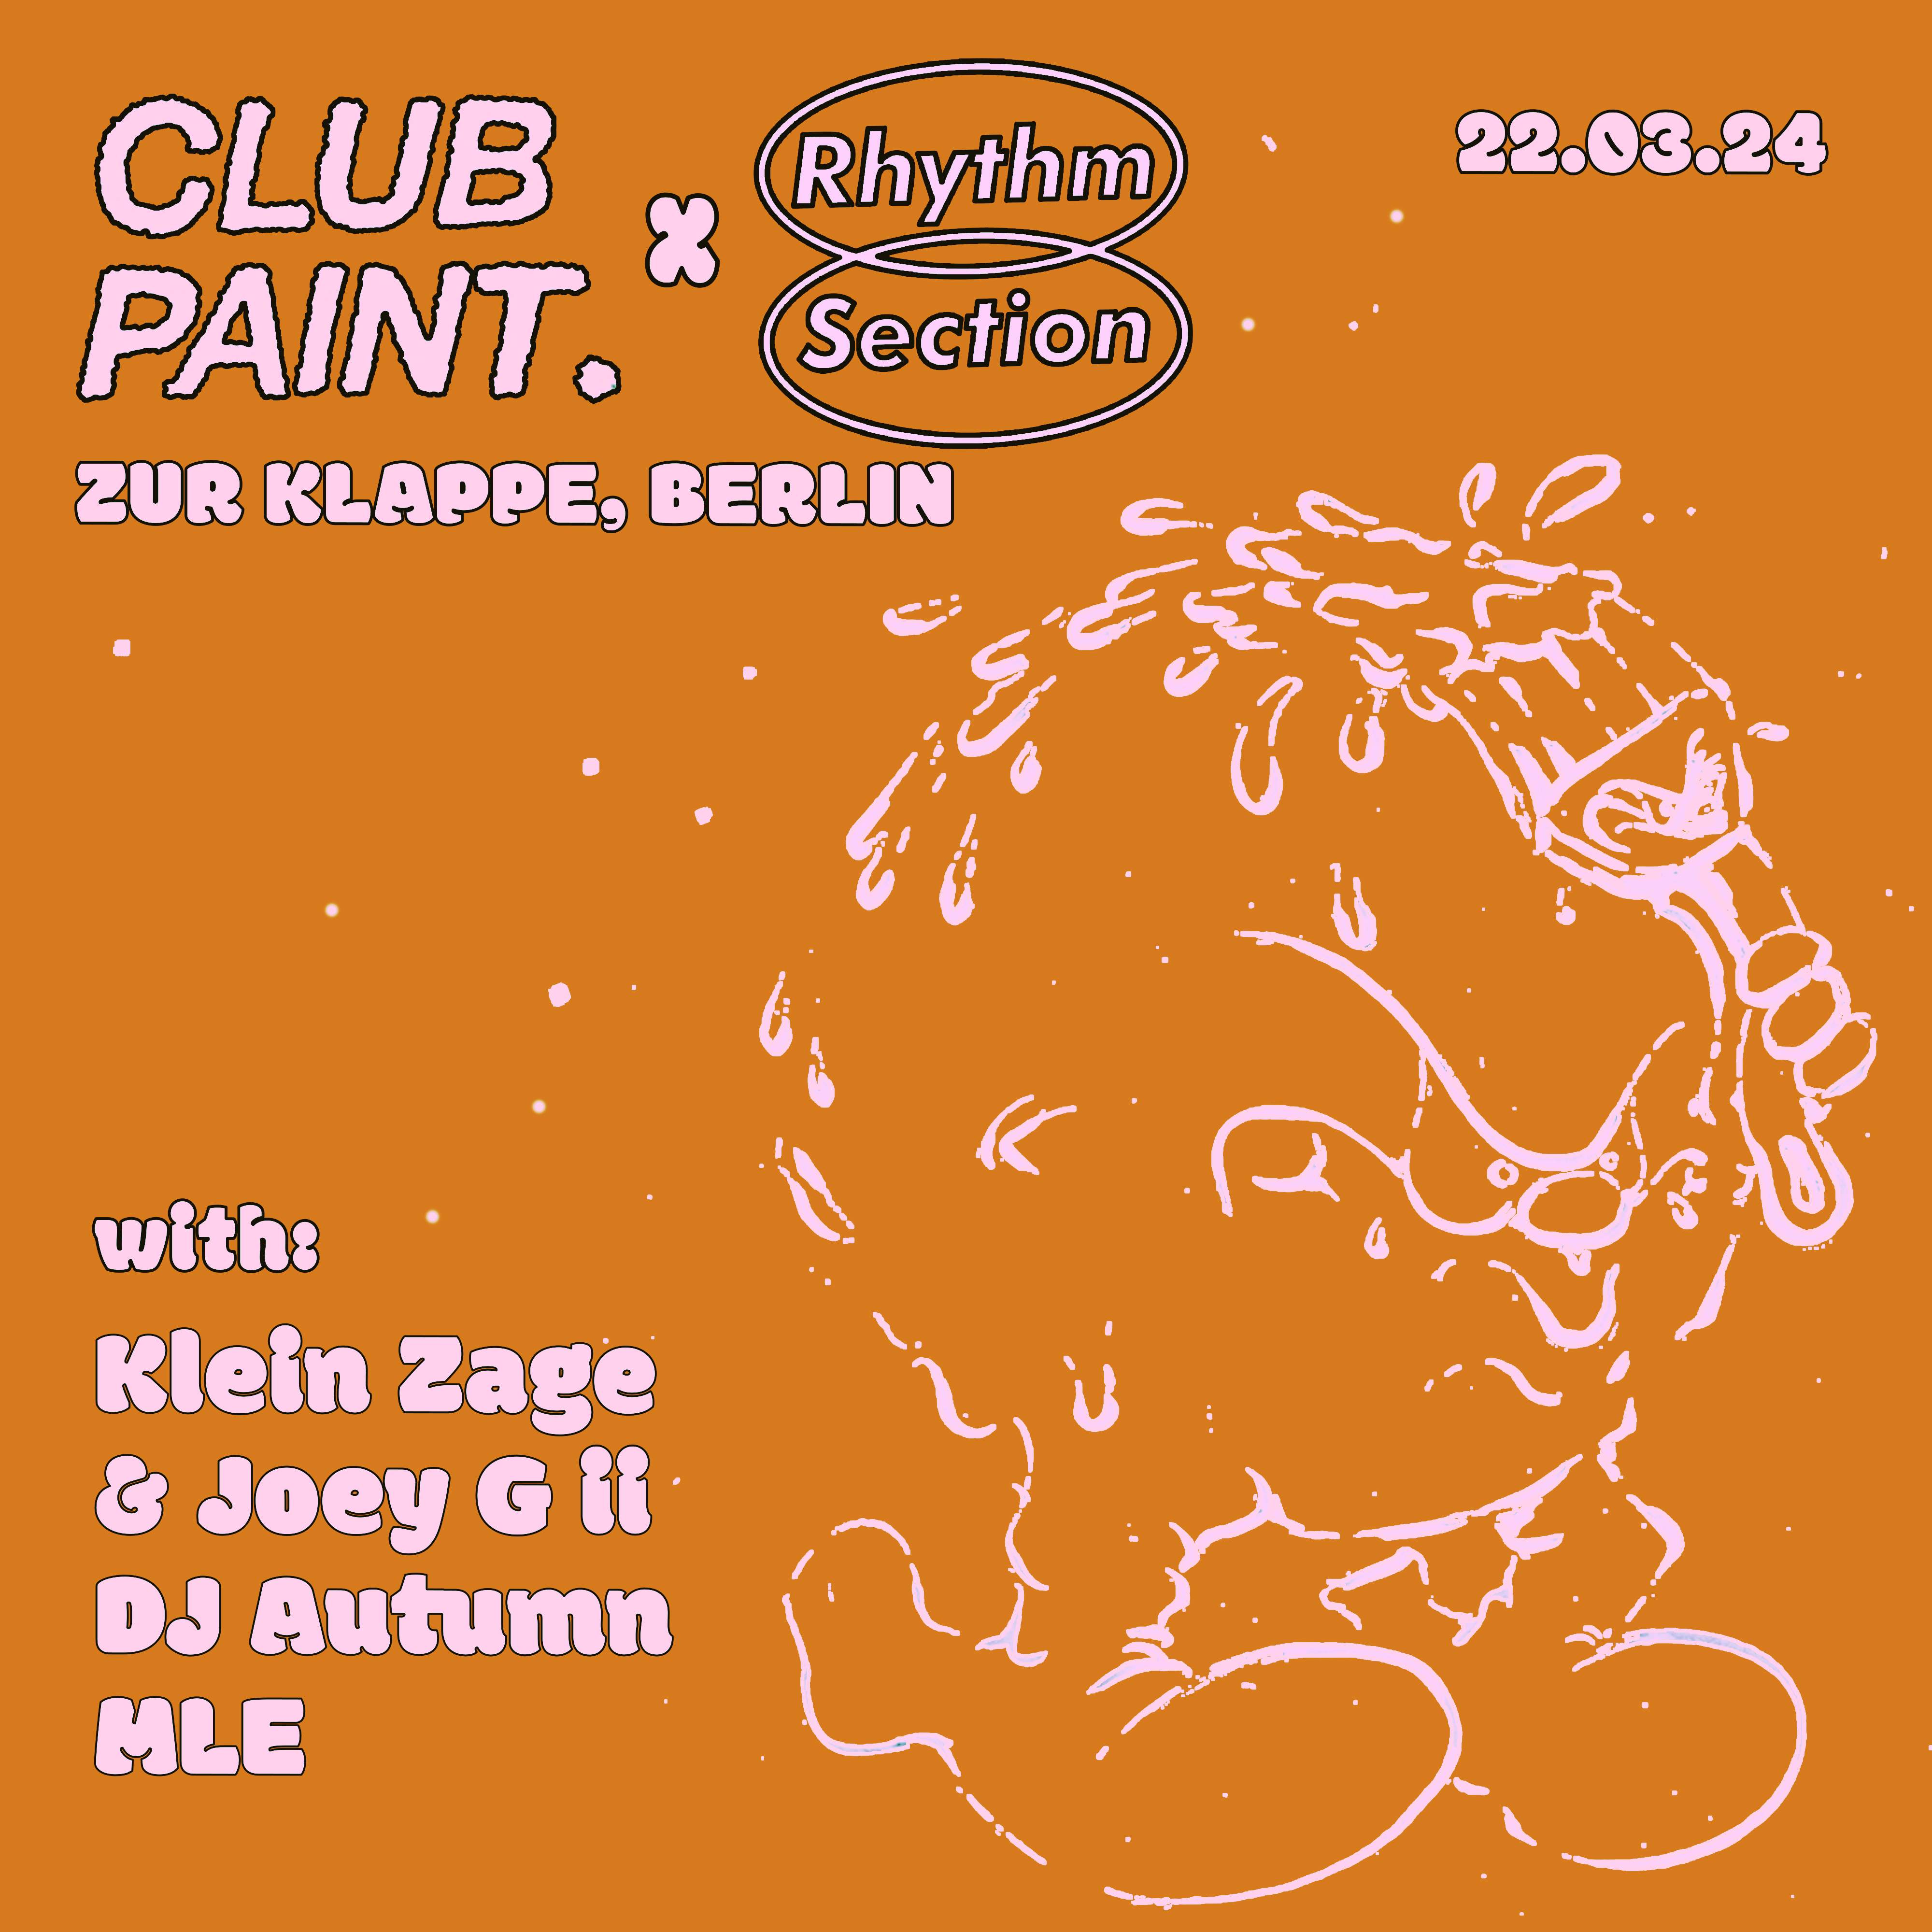 BERLIN: Rhythm Section x Club Paint - Joey G ii b2b Klein Zage, DJ Autumn & MLE - フライヤー表